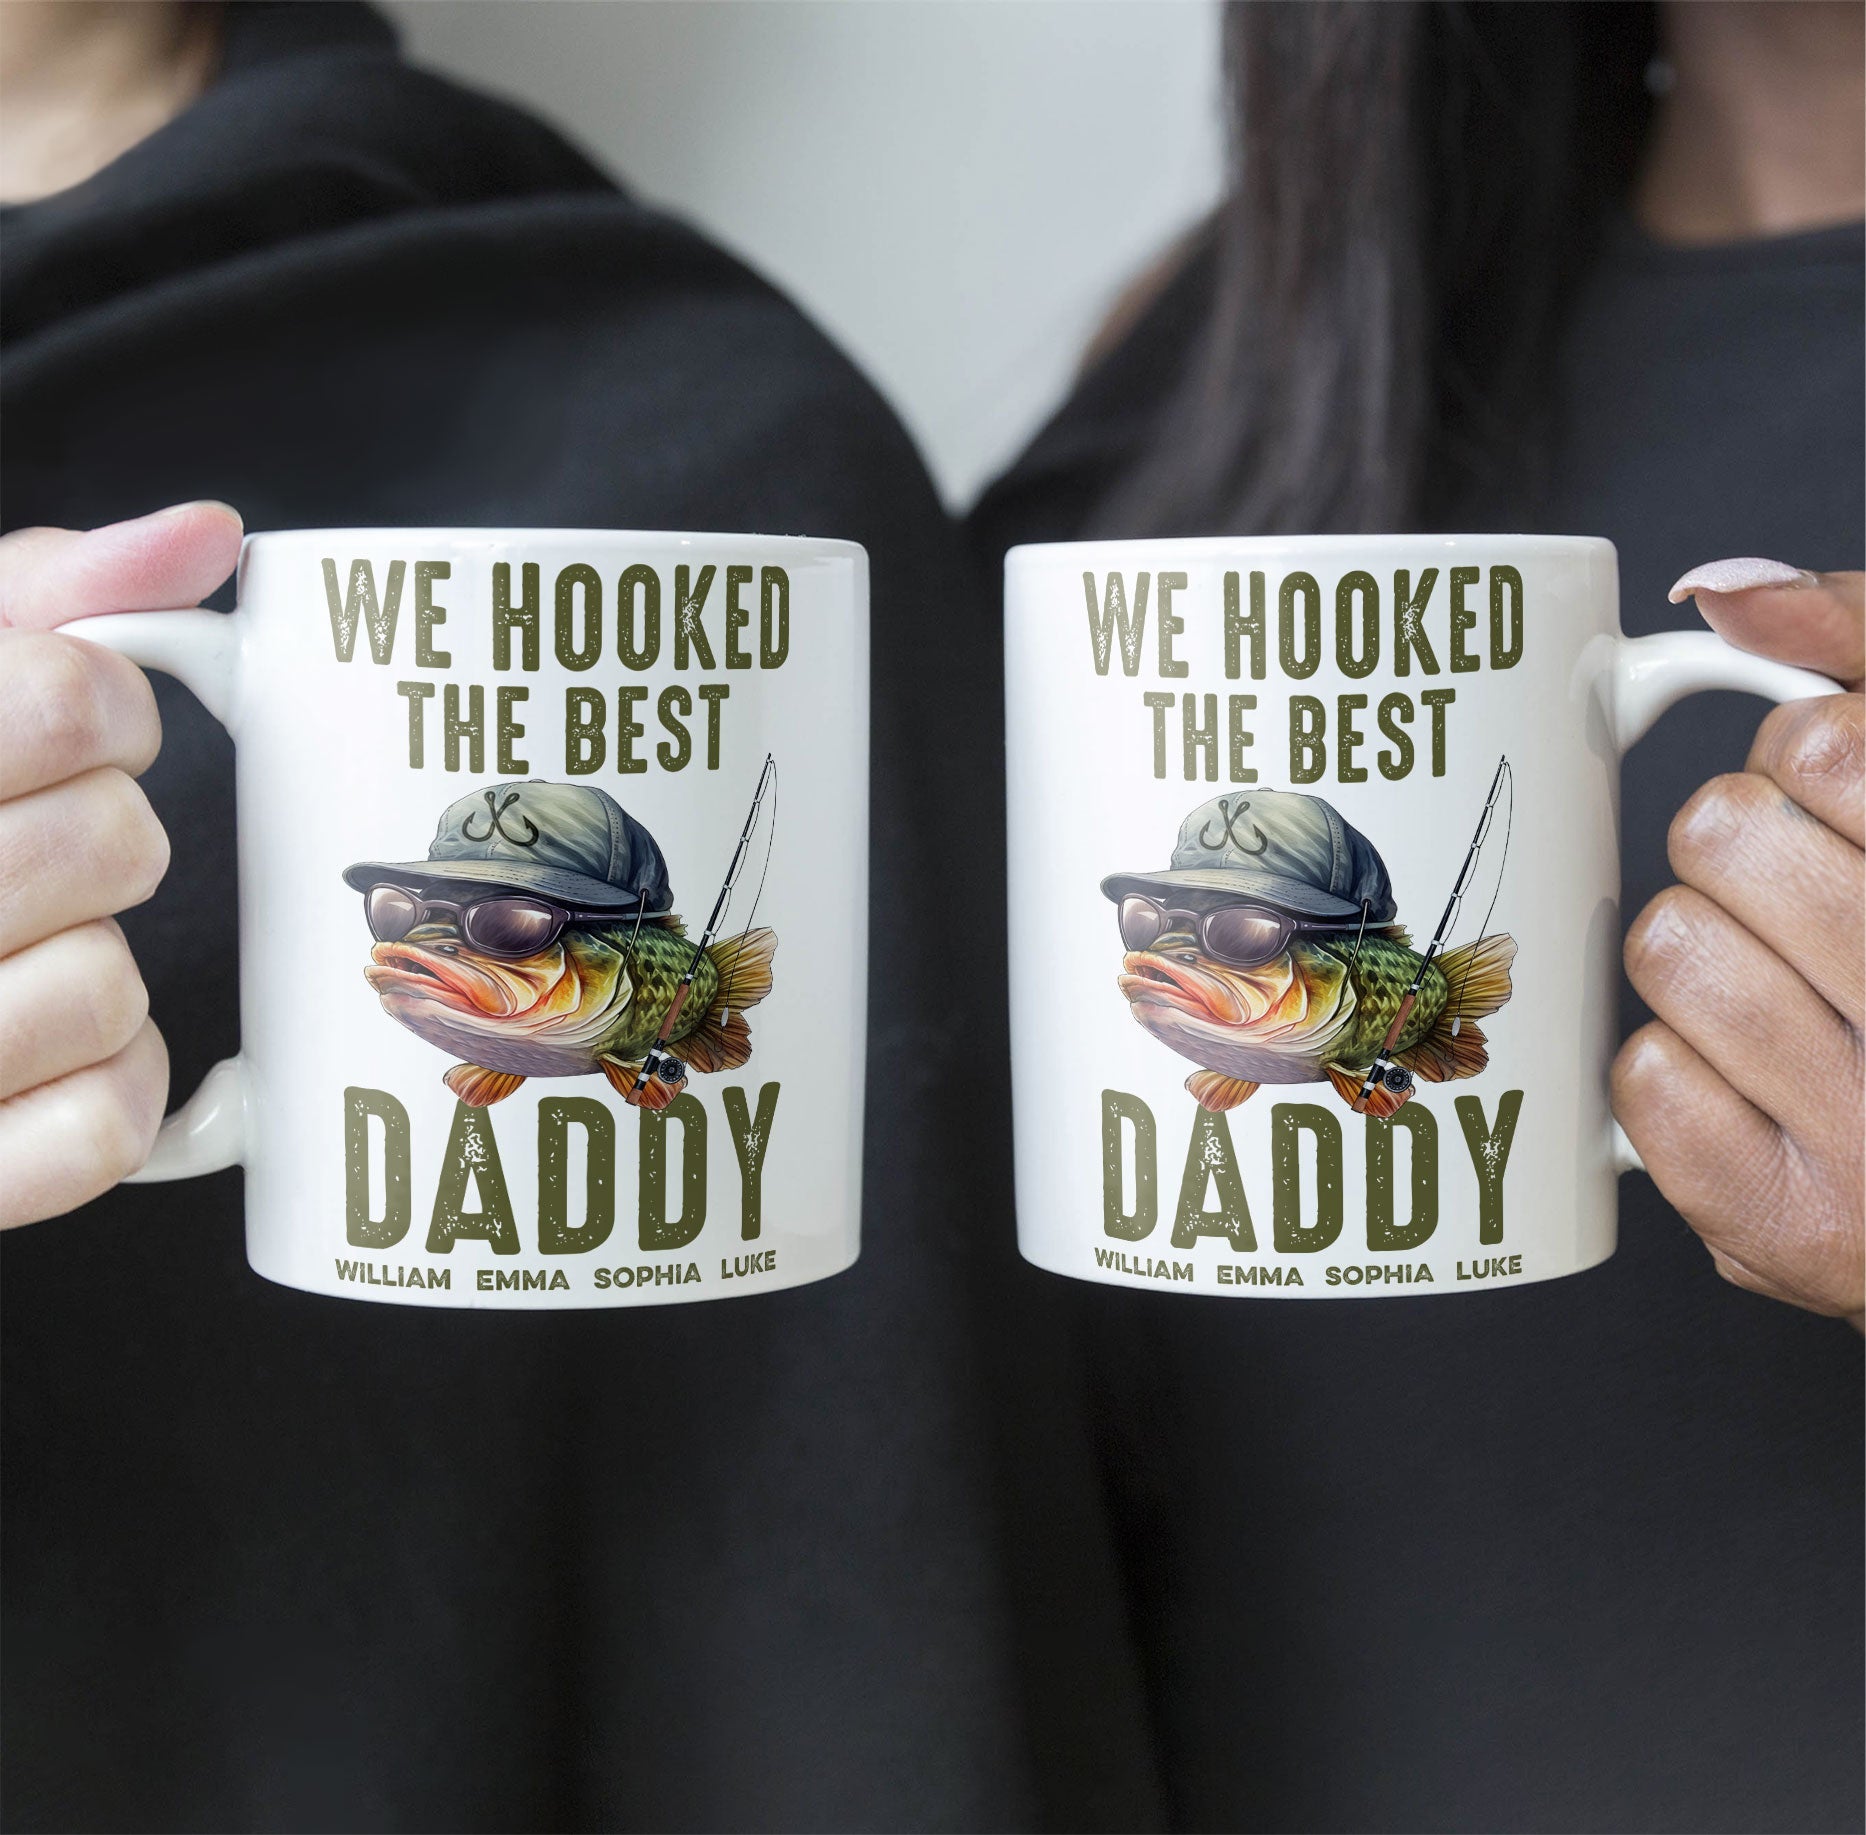 We Hooked The Best Dad, Grandpa, Papa - Personalized Mug – Macorner